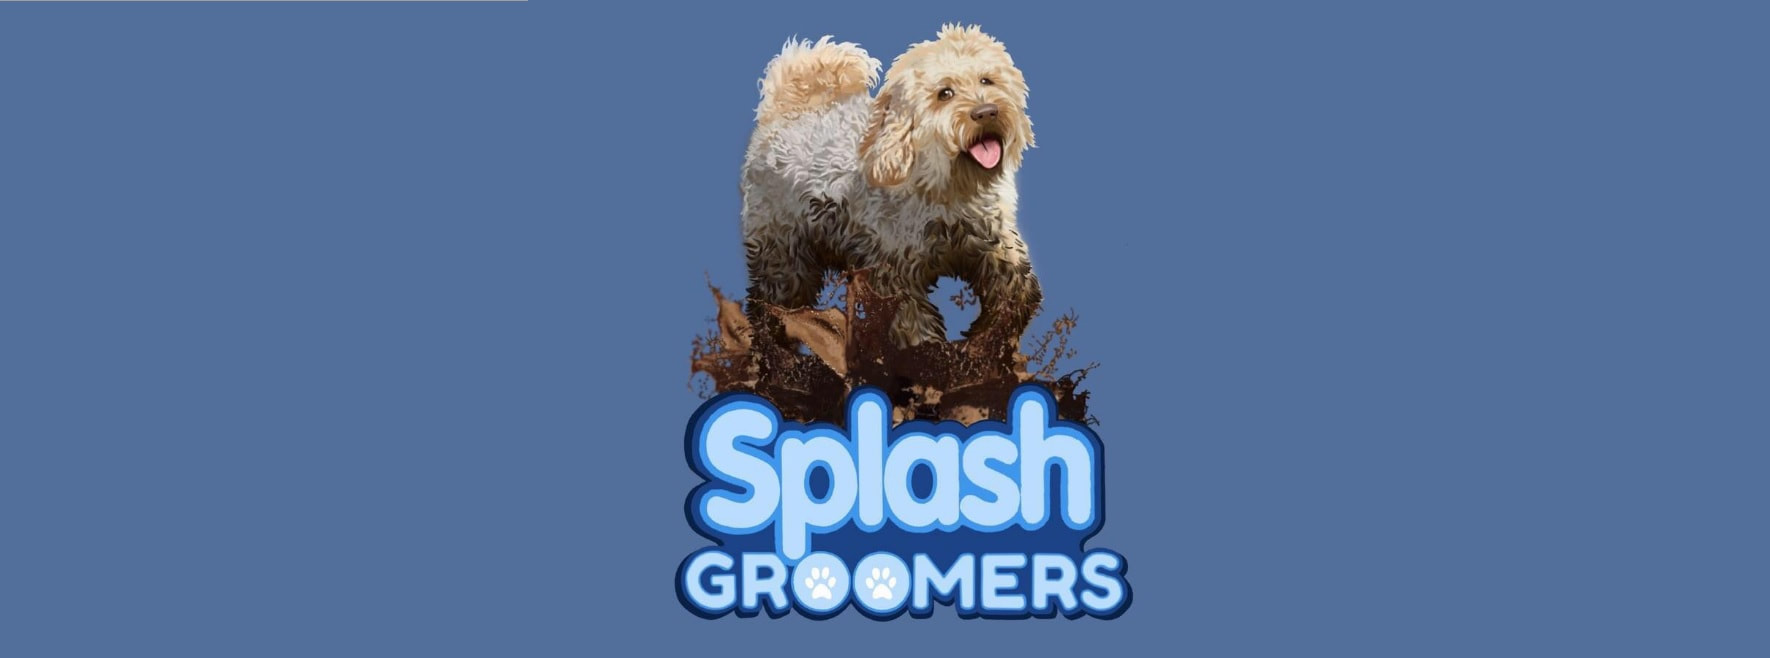 About Splash Groomers, Gloucester